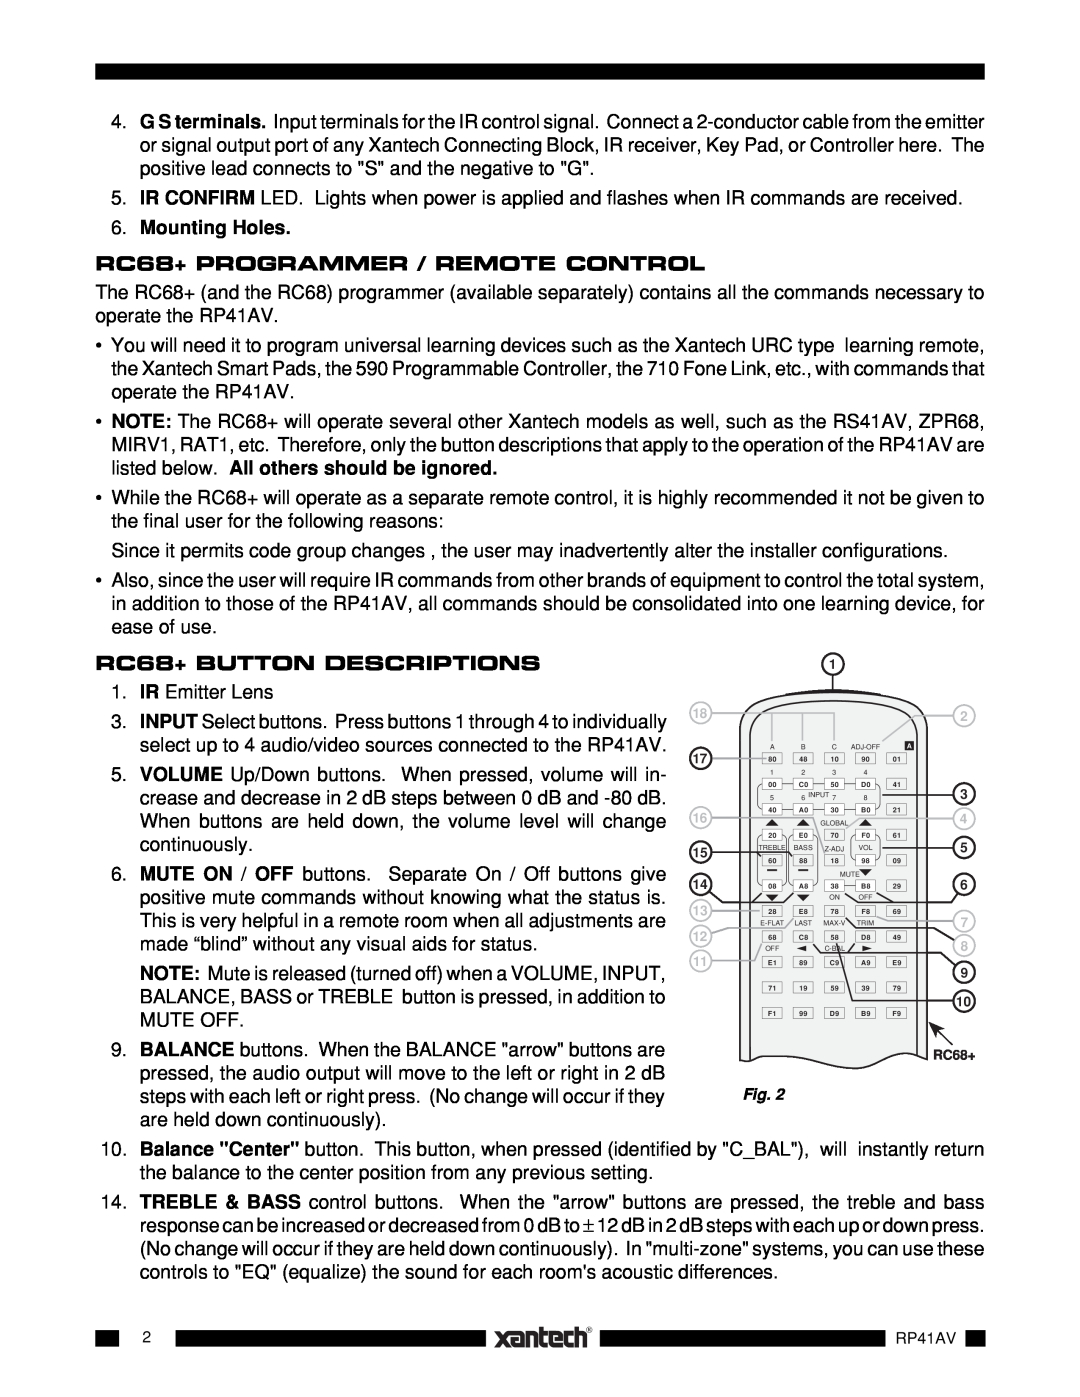 Xantech RP41AV installation instructions Mounting Holes, RC68+ PROGRAMMER / REMOTE CONTROL, RC68+ BUTTON DESCRIPTIONS 